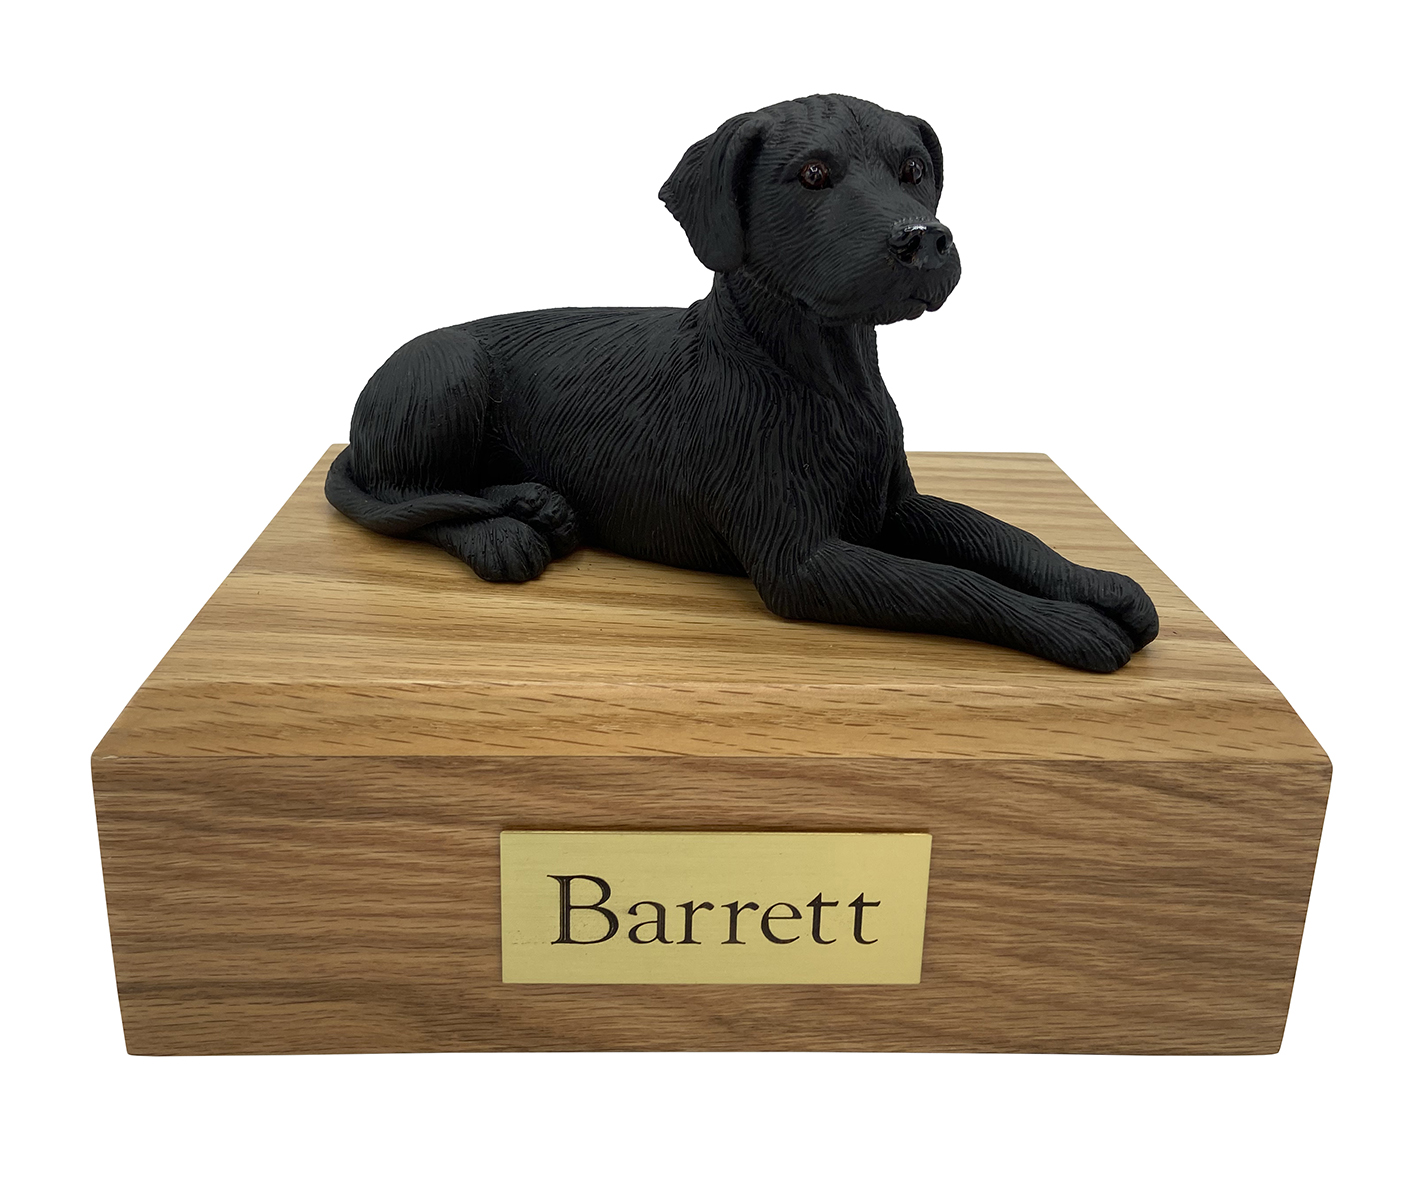 Dog, Labrador, Black - Figurine Urn